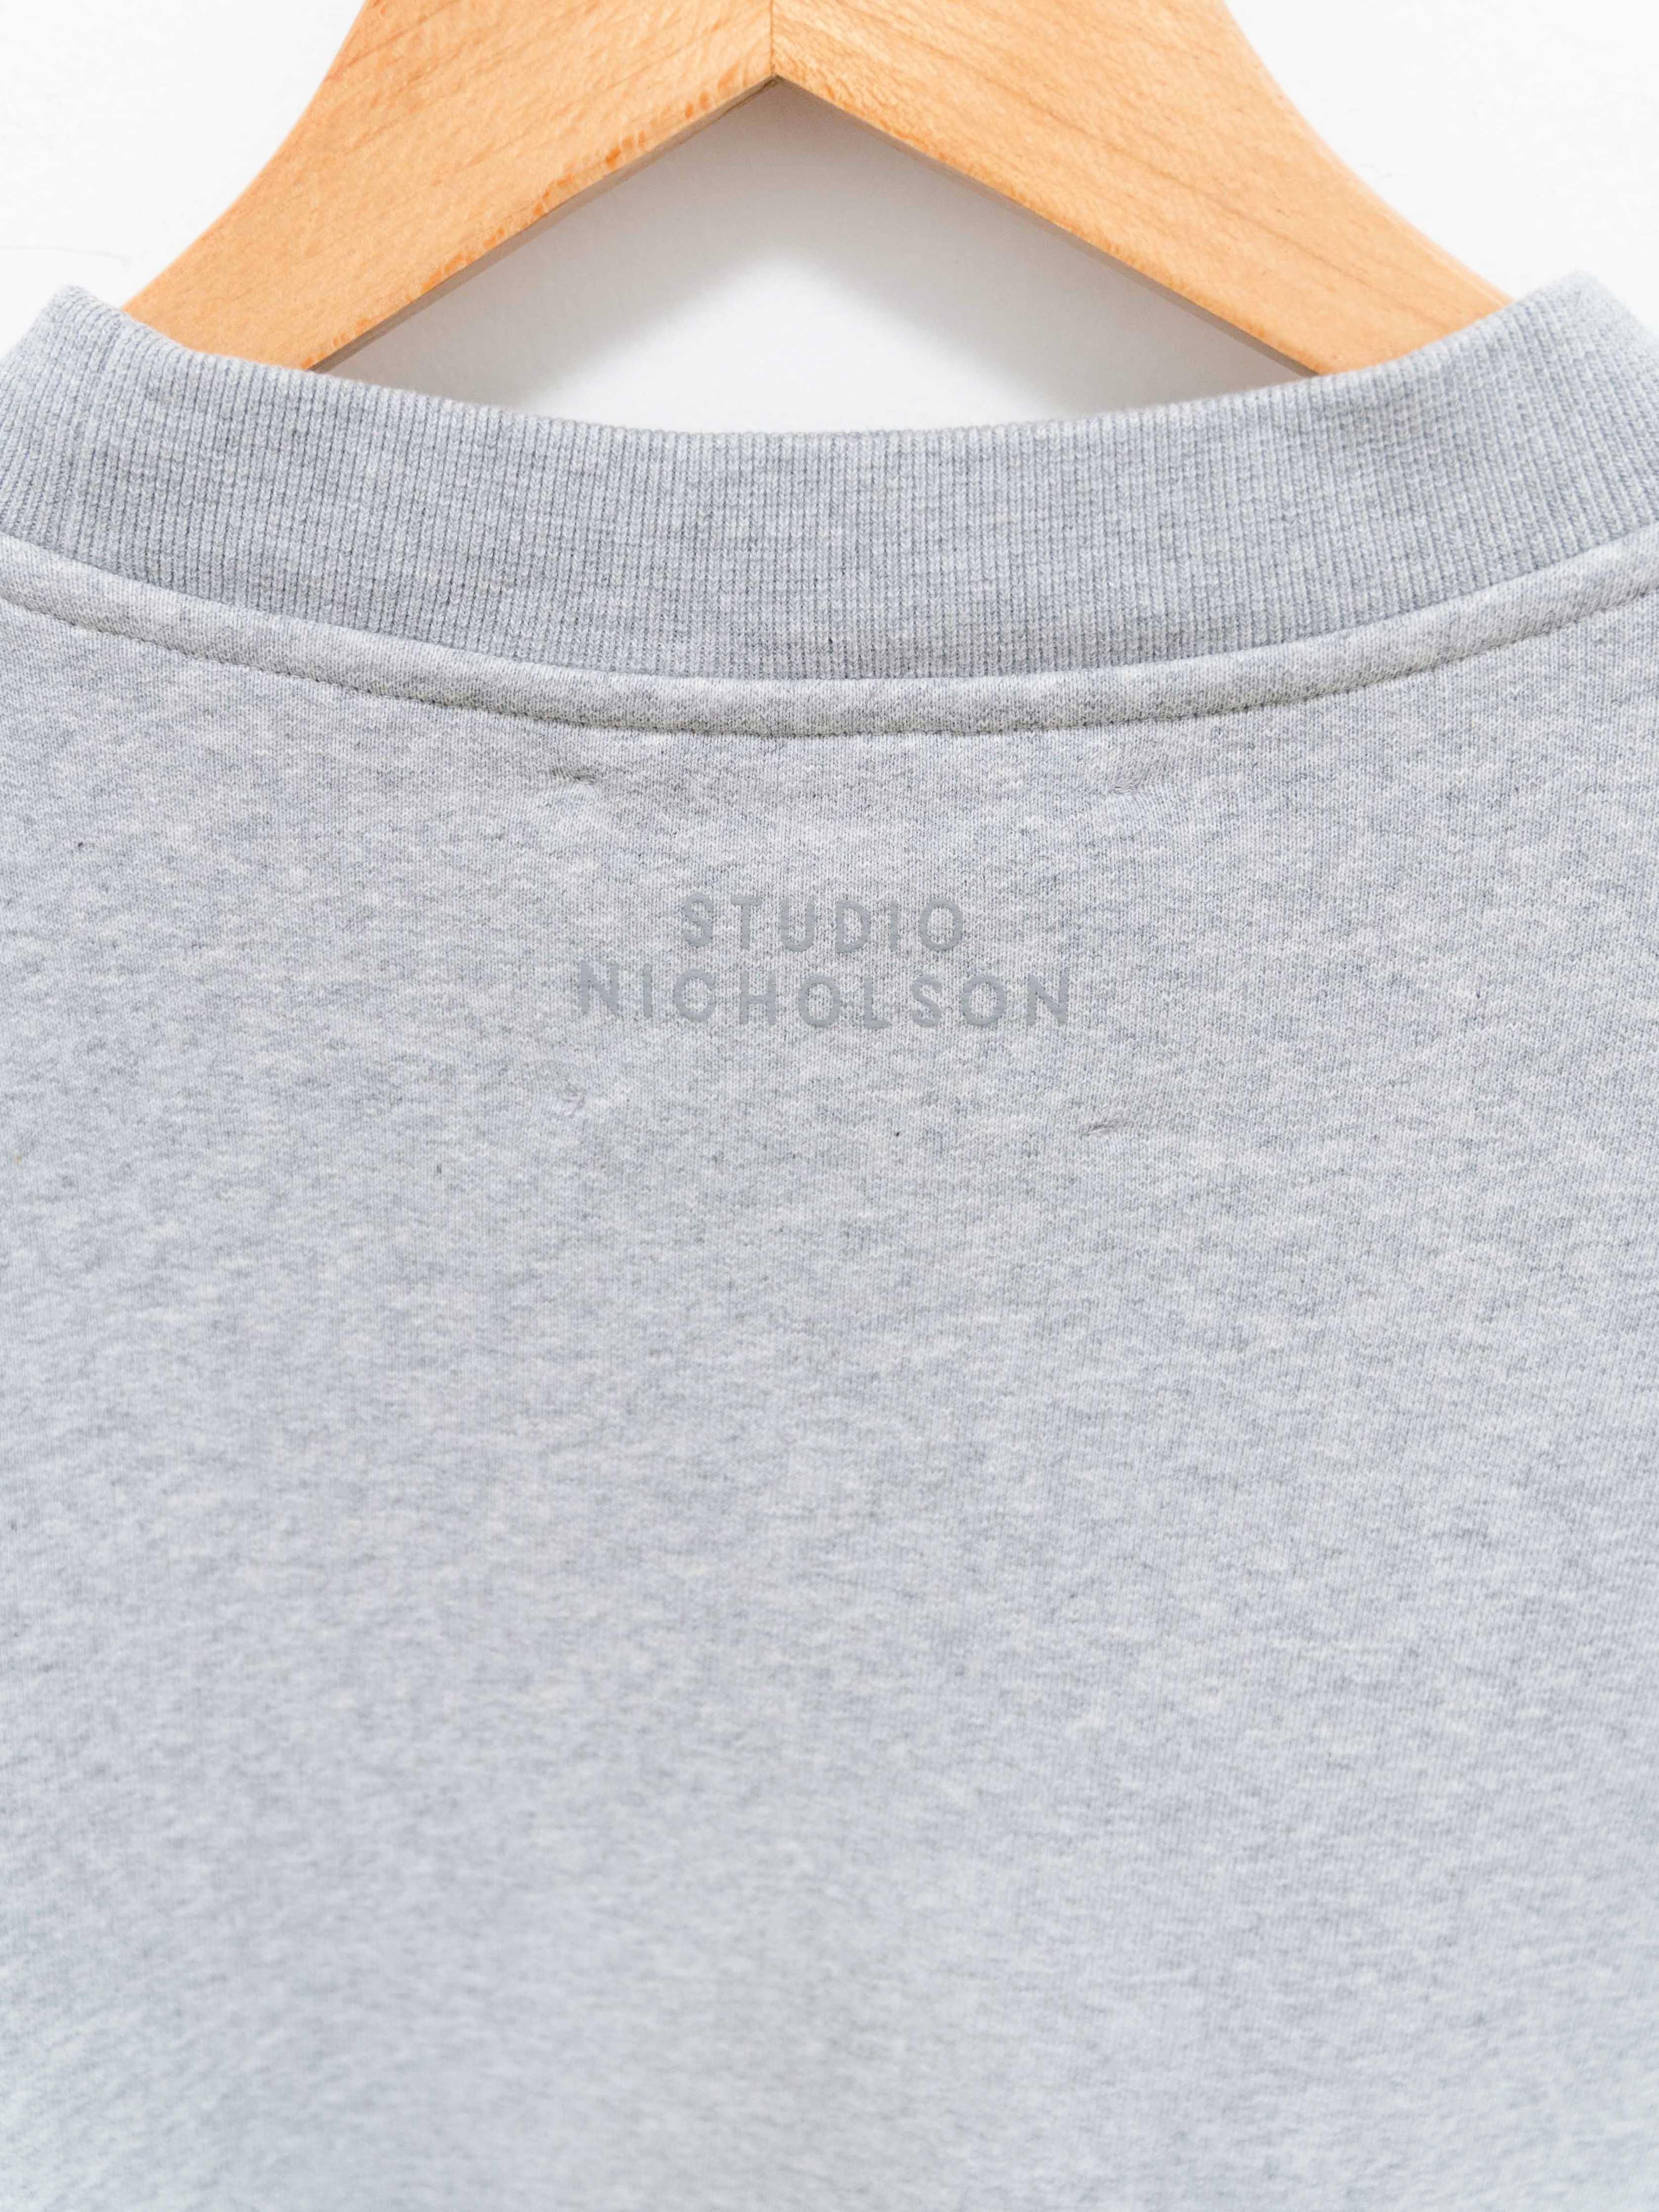 Namu Shop - Studio Nicholson Brawn Sweatshirt Top - Gray Marl